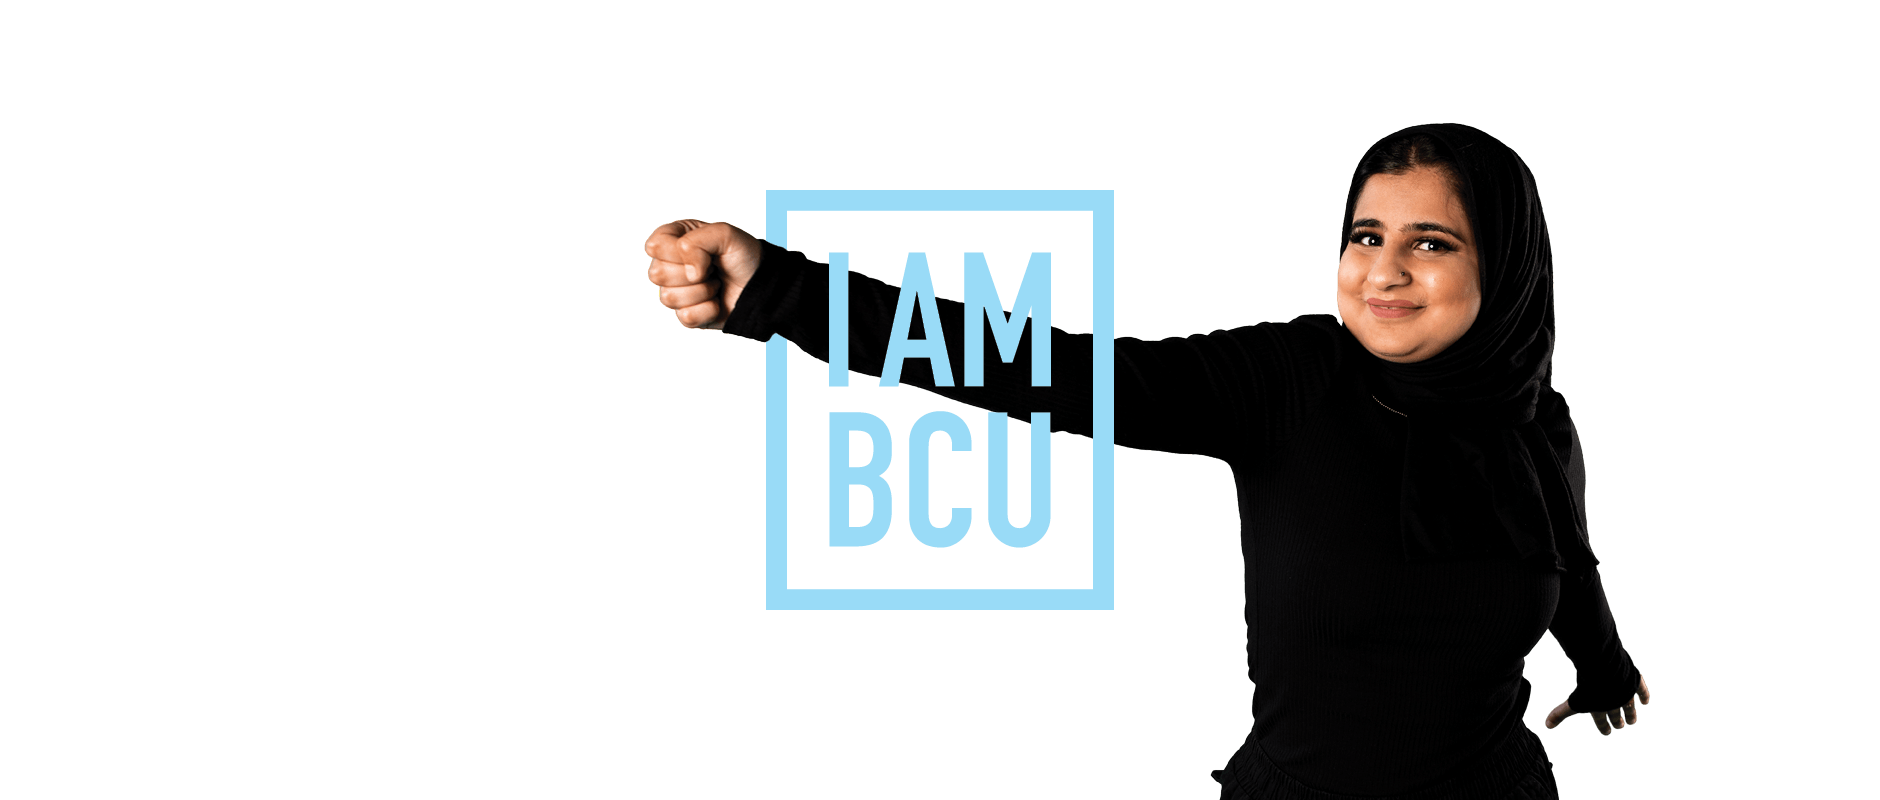 Humera punches through the I am BCU logo